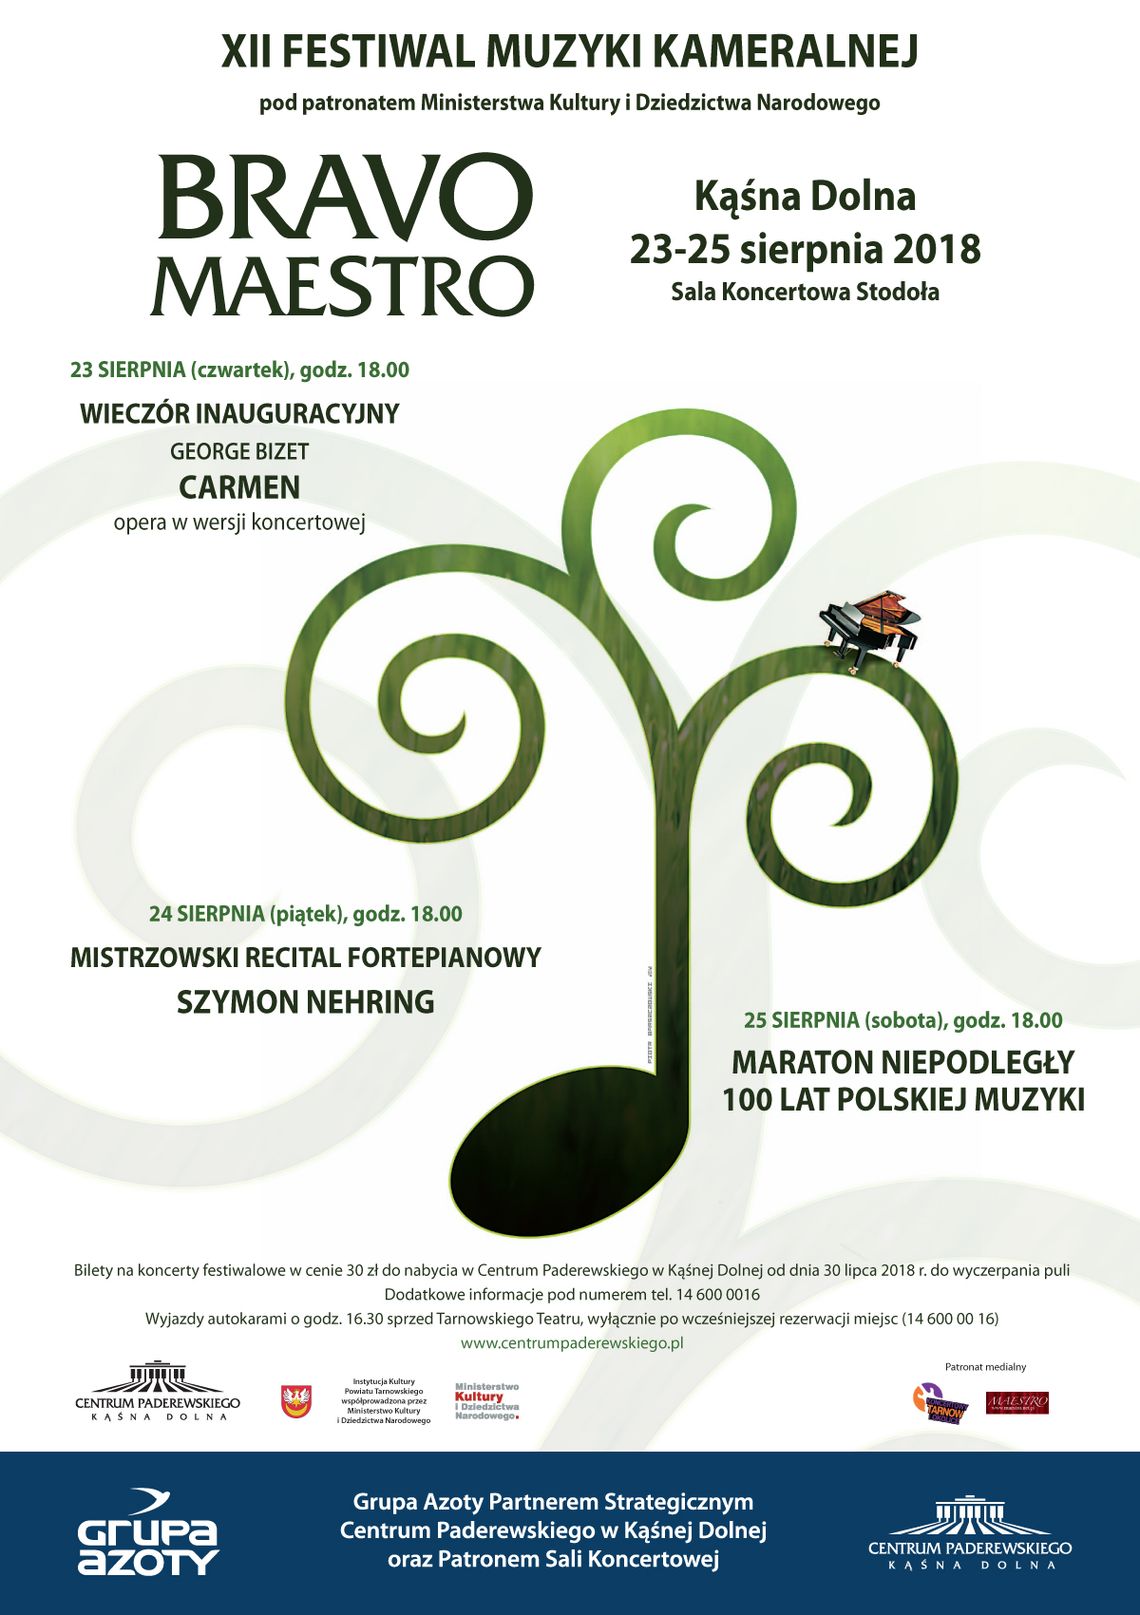 XII Festiwal Muzyki Kameralnej Bravo Maestro